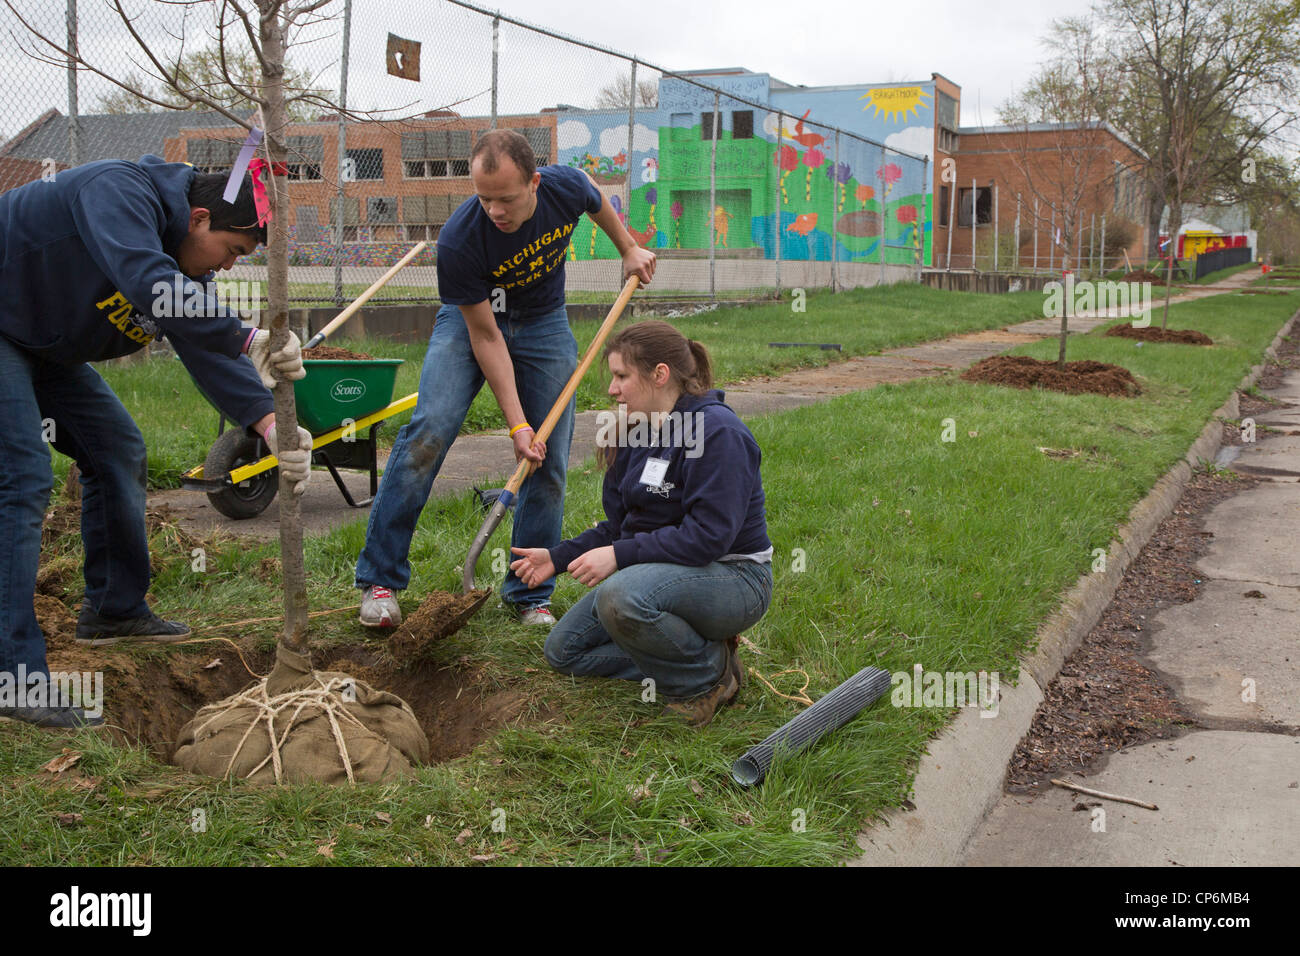 Detroit, Michigan - Student volunteers from the University of Michigan plant trees in Detroit's Brightmoor neighborhood. Stock Photo